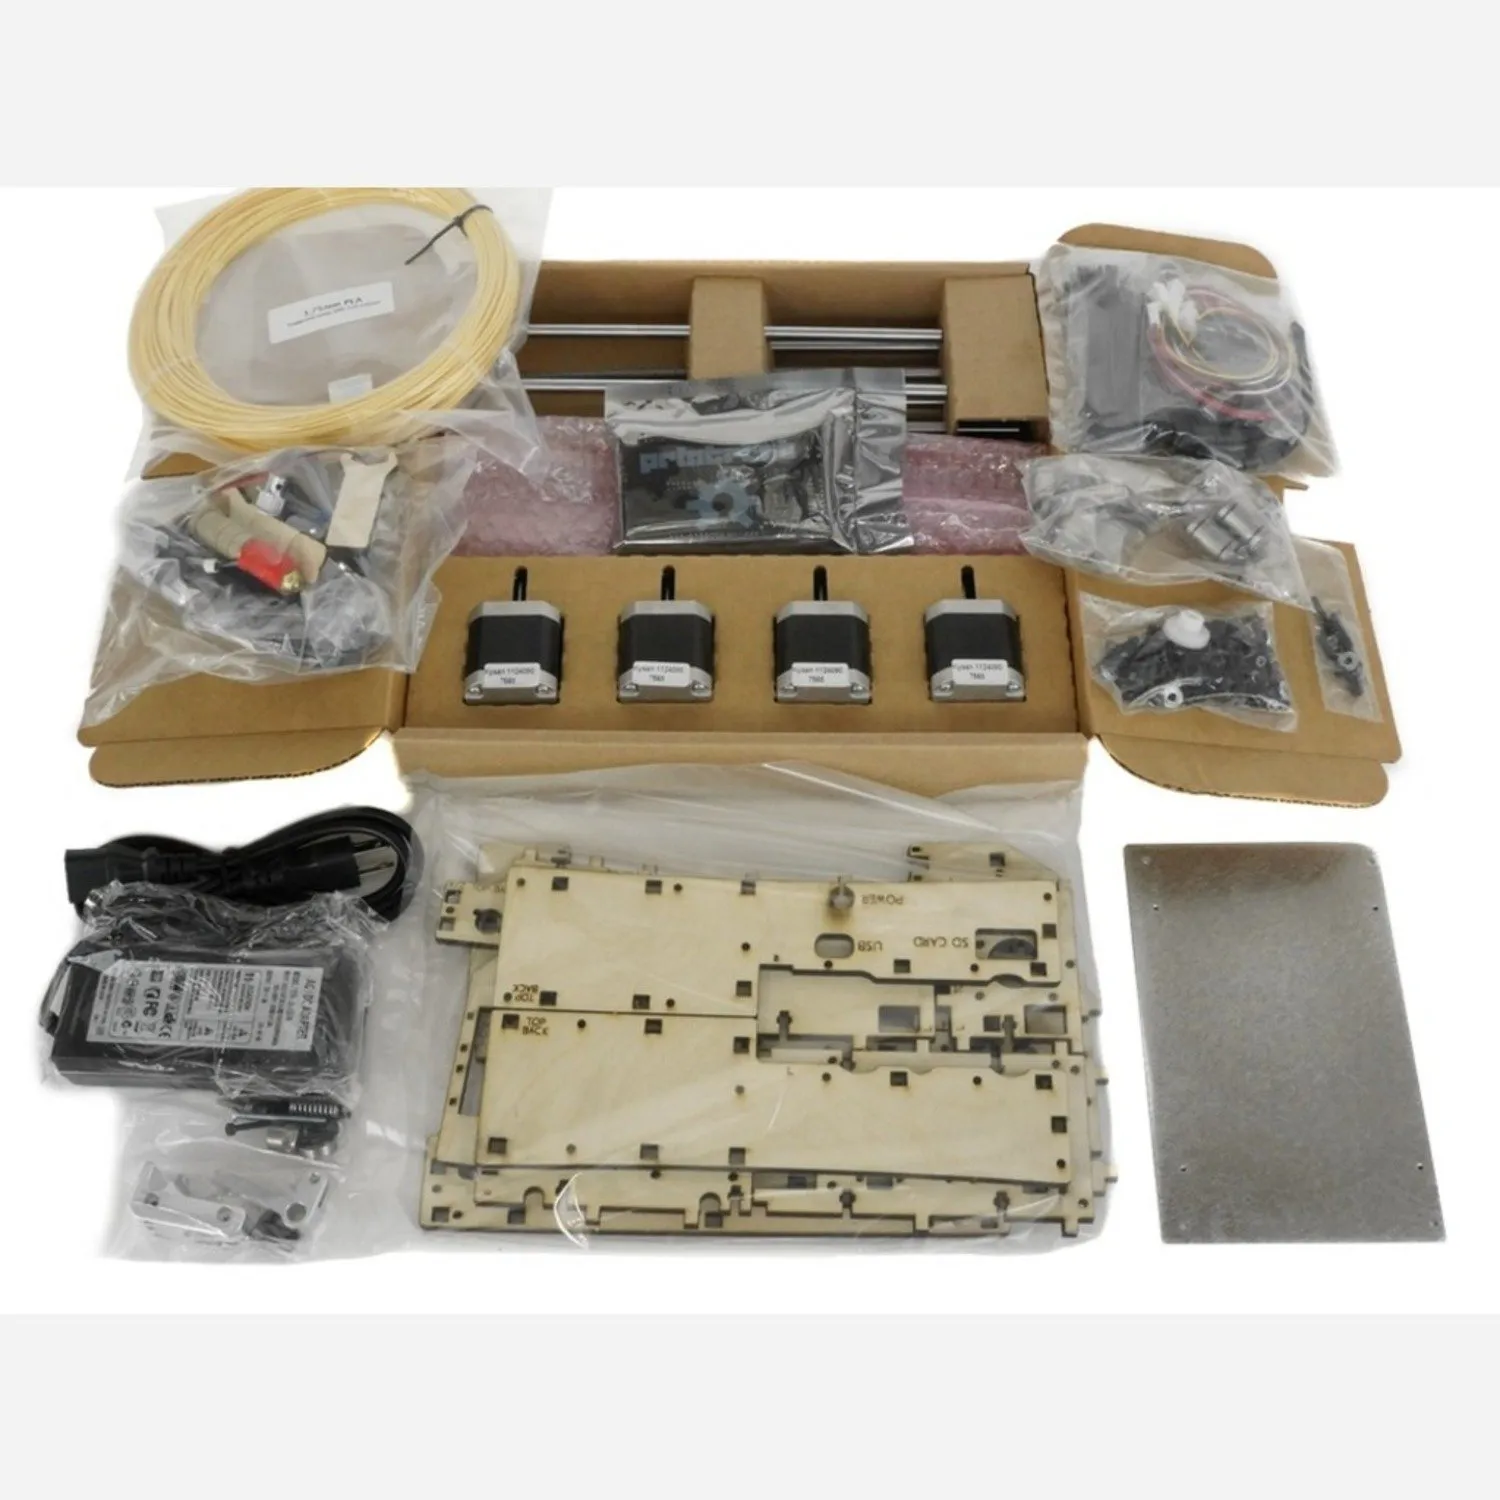 Photo of Printrbot Simple Kit - 1405 Model